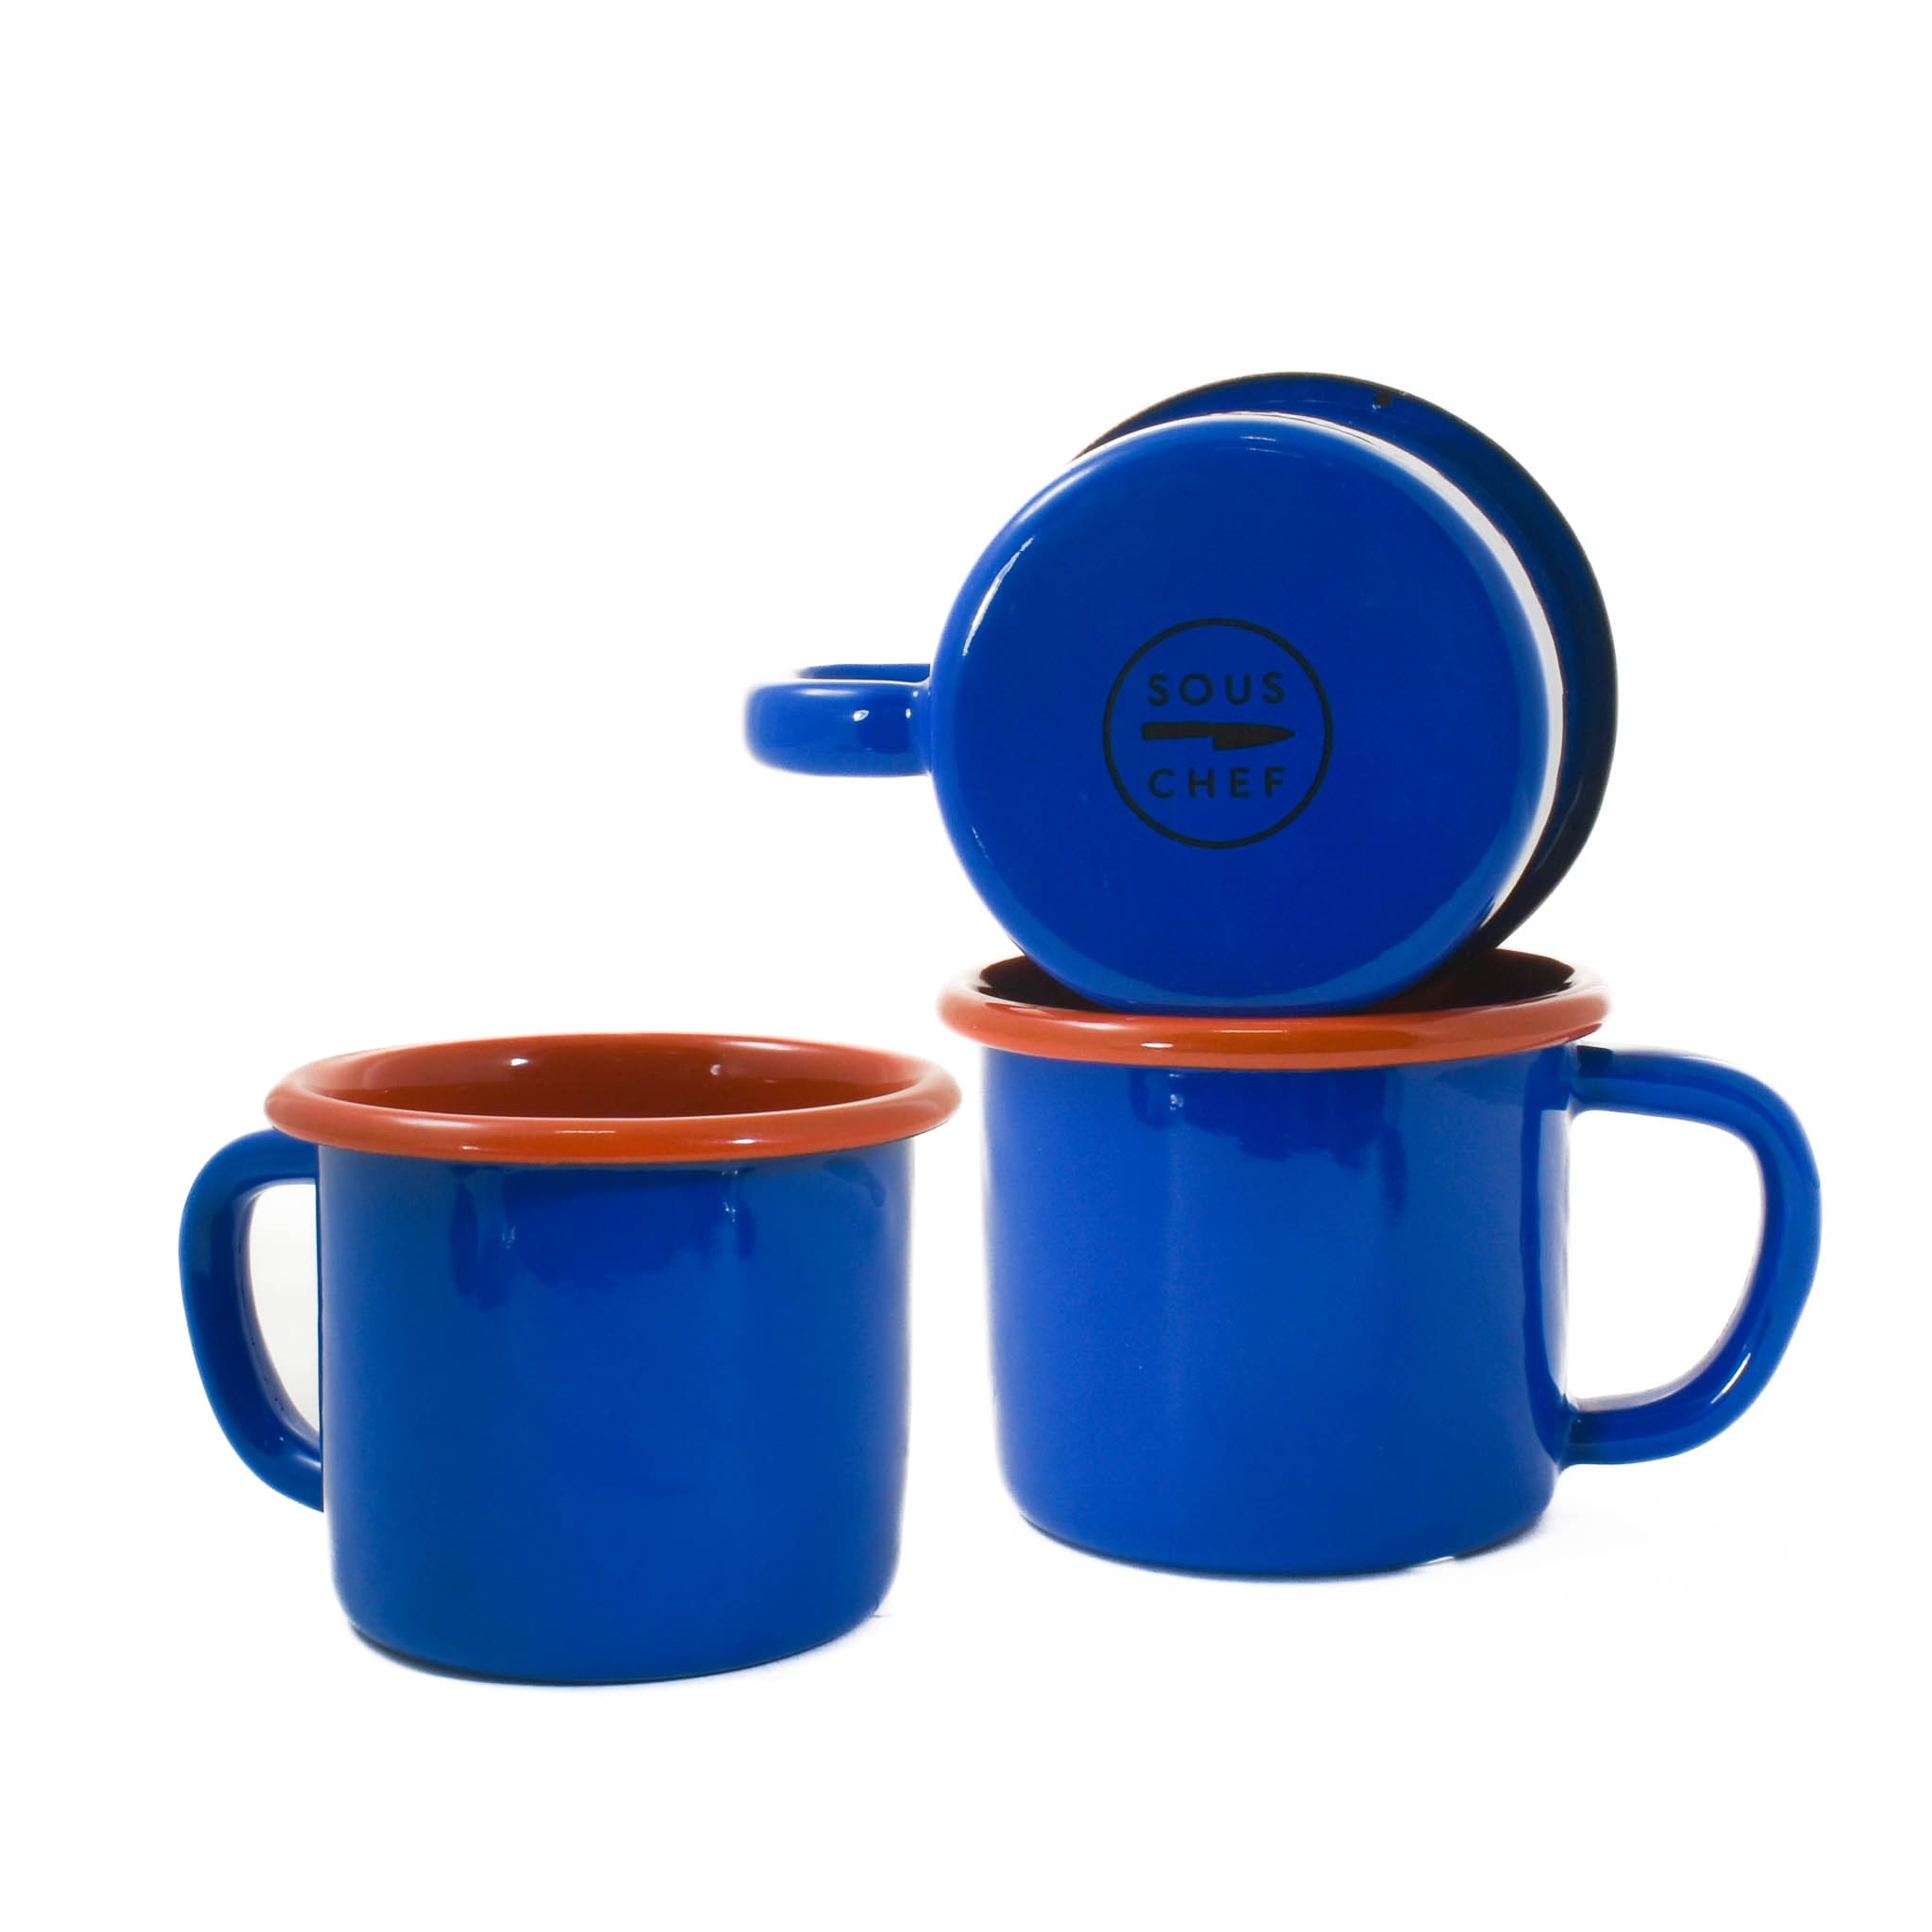 Kapka Colourblock Enamel Mug, Blue & Red